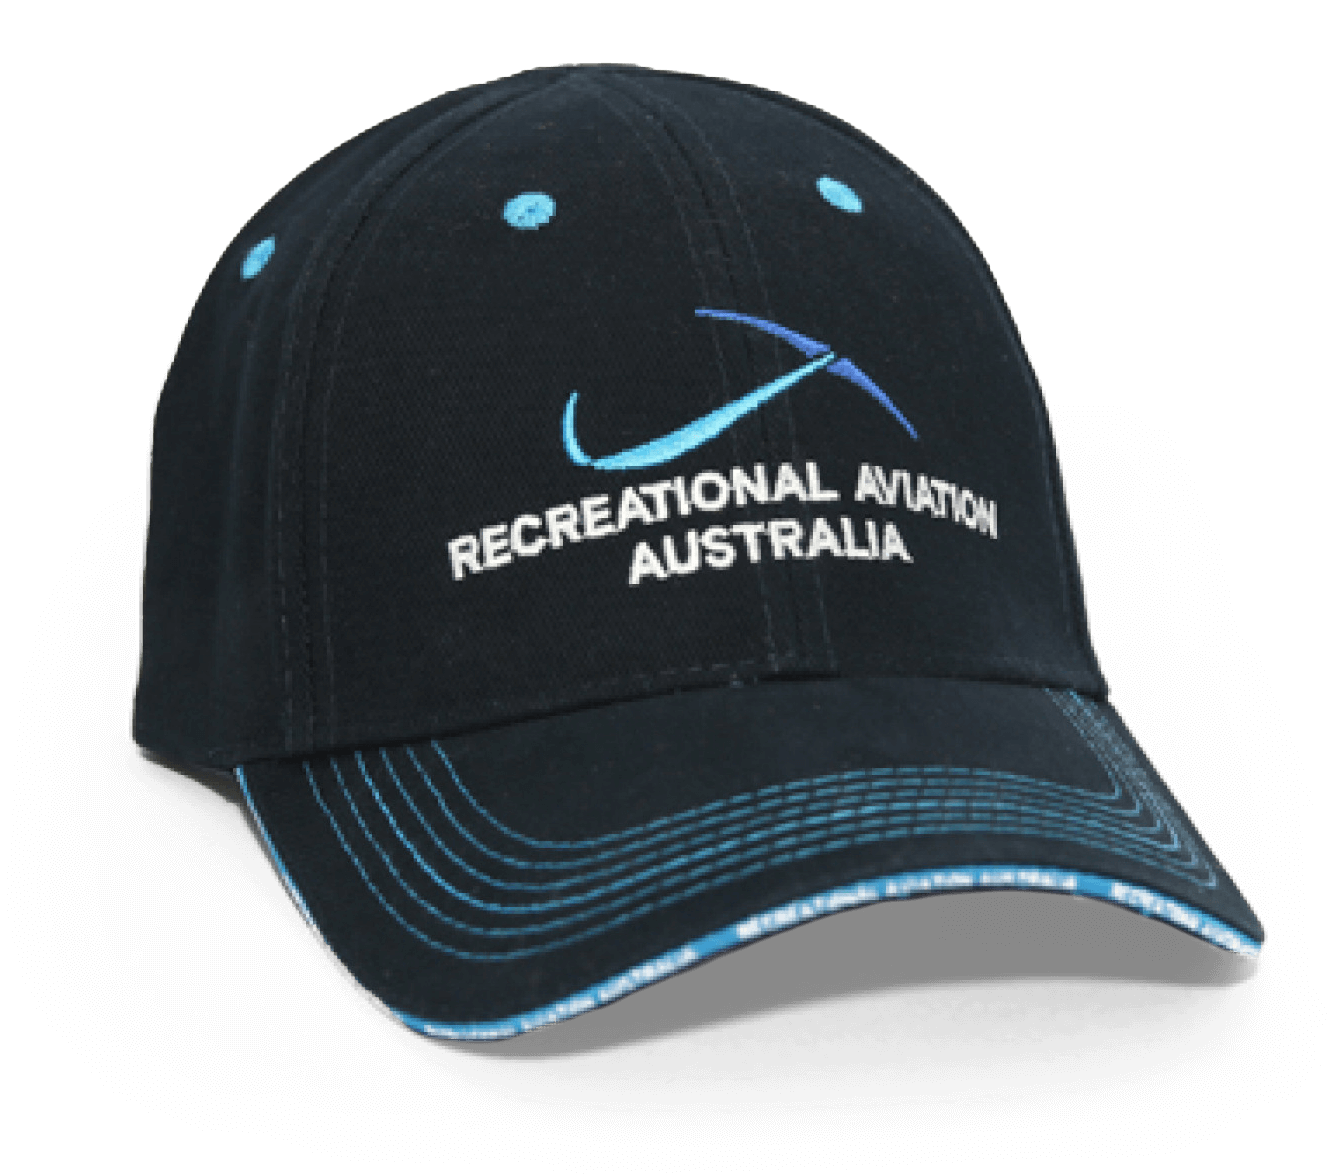 Category: Baseball Caps - Recreational Aviation Australia